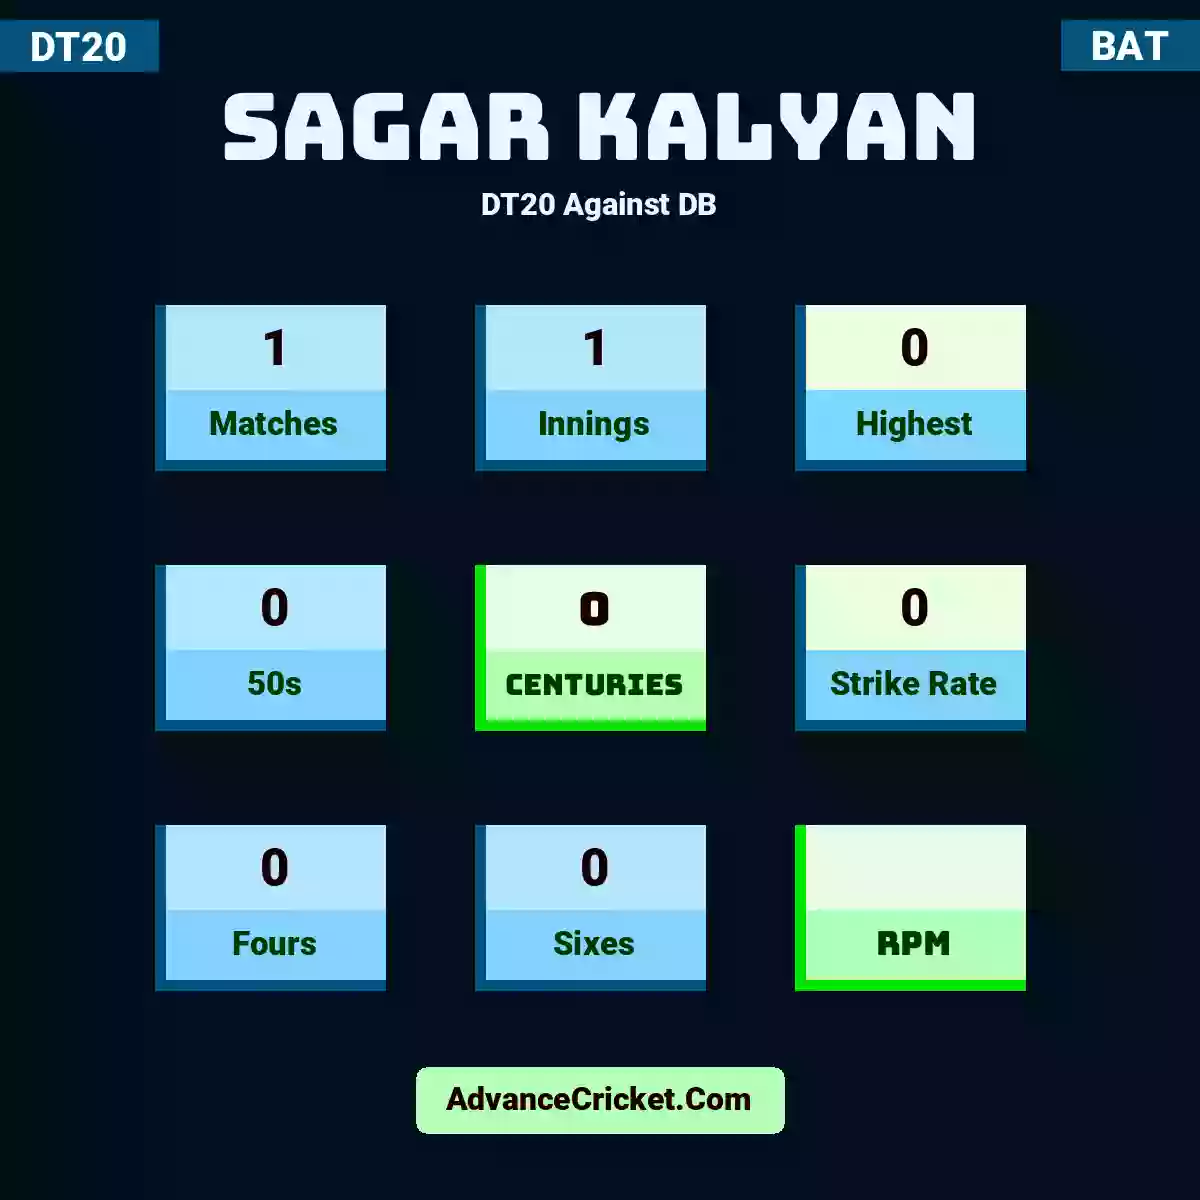 Sagar Kalyan DT20  Against DB, Sagar Kalyan played 1 matches, scored 0 runs as highest, 0 half-centuries, and 0 centuries, with a strike rate of 0. S.Kalyan hit 0 fours and 0 sixes.